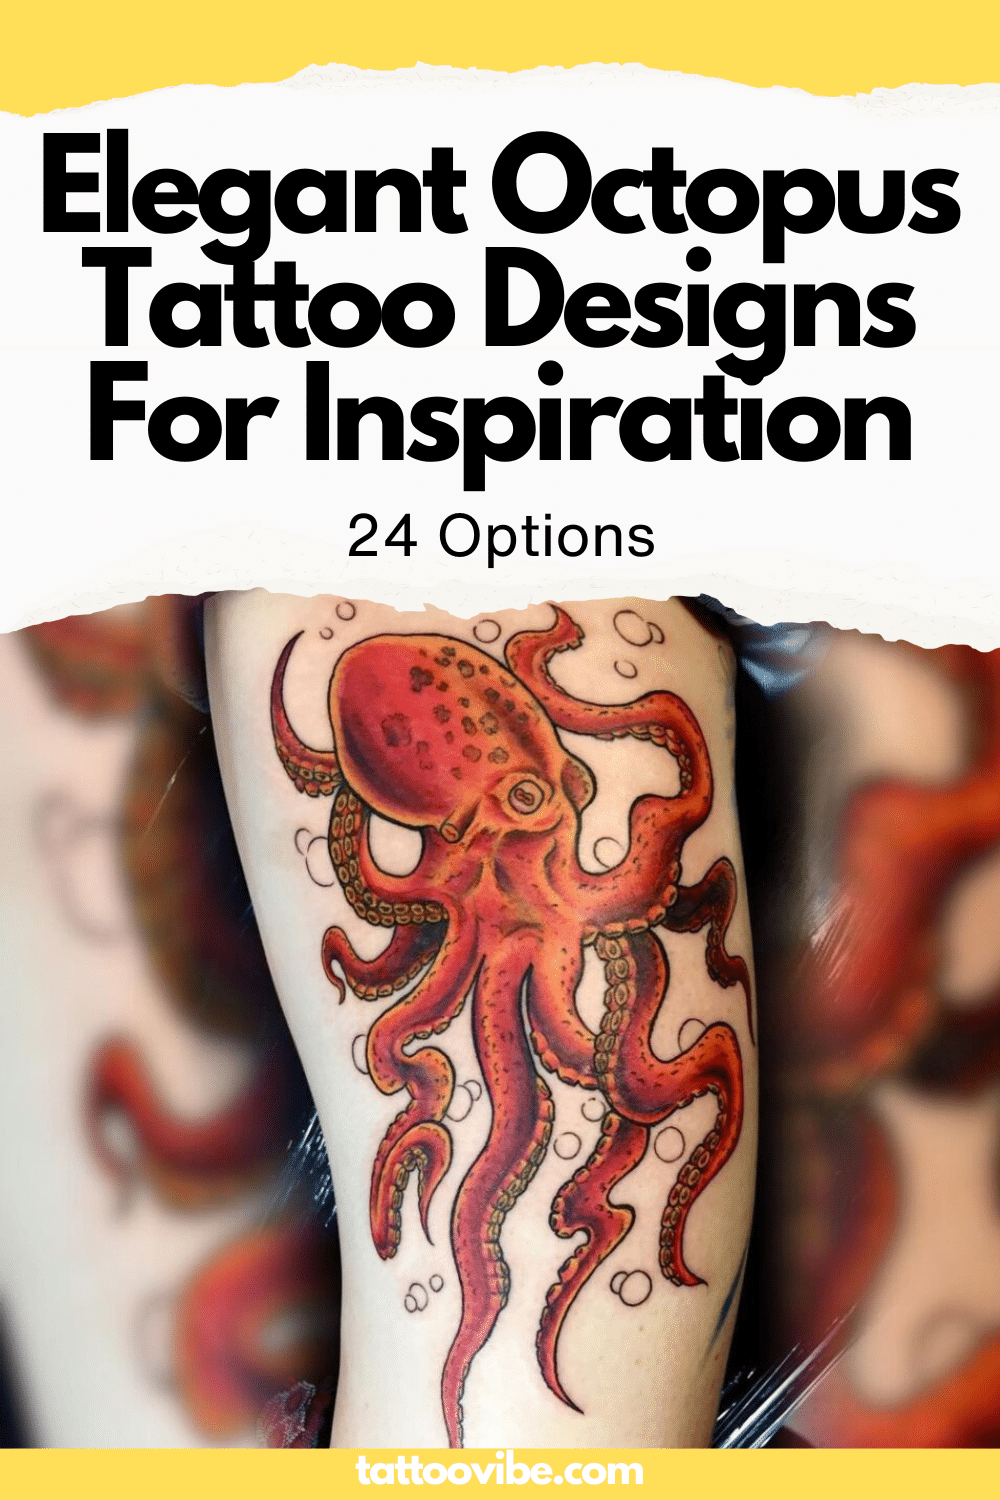 Elegant Octopus Tattoo Designs For Inspiration: 24 Options